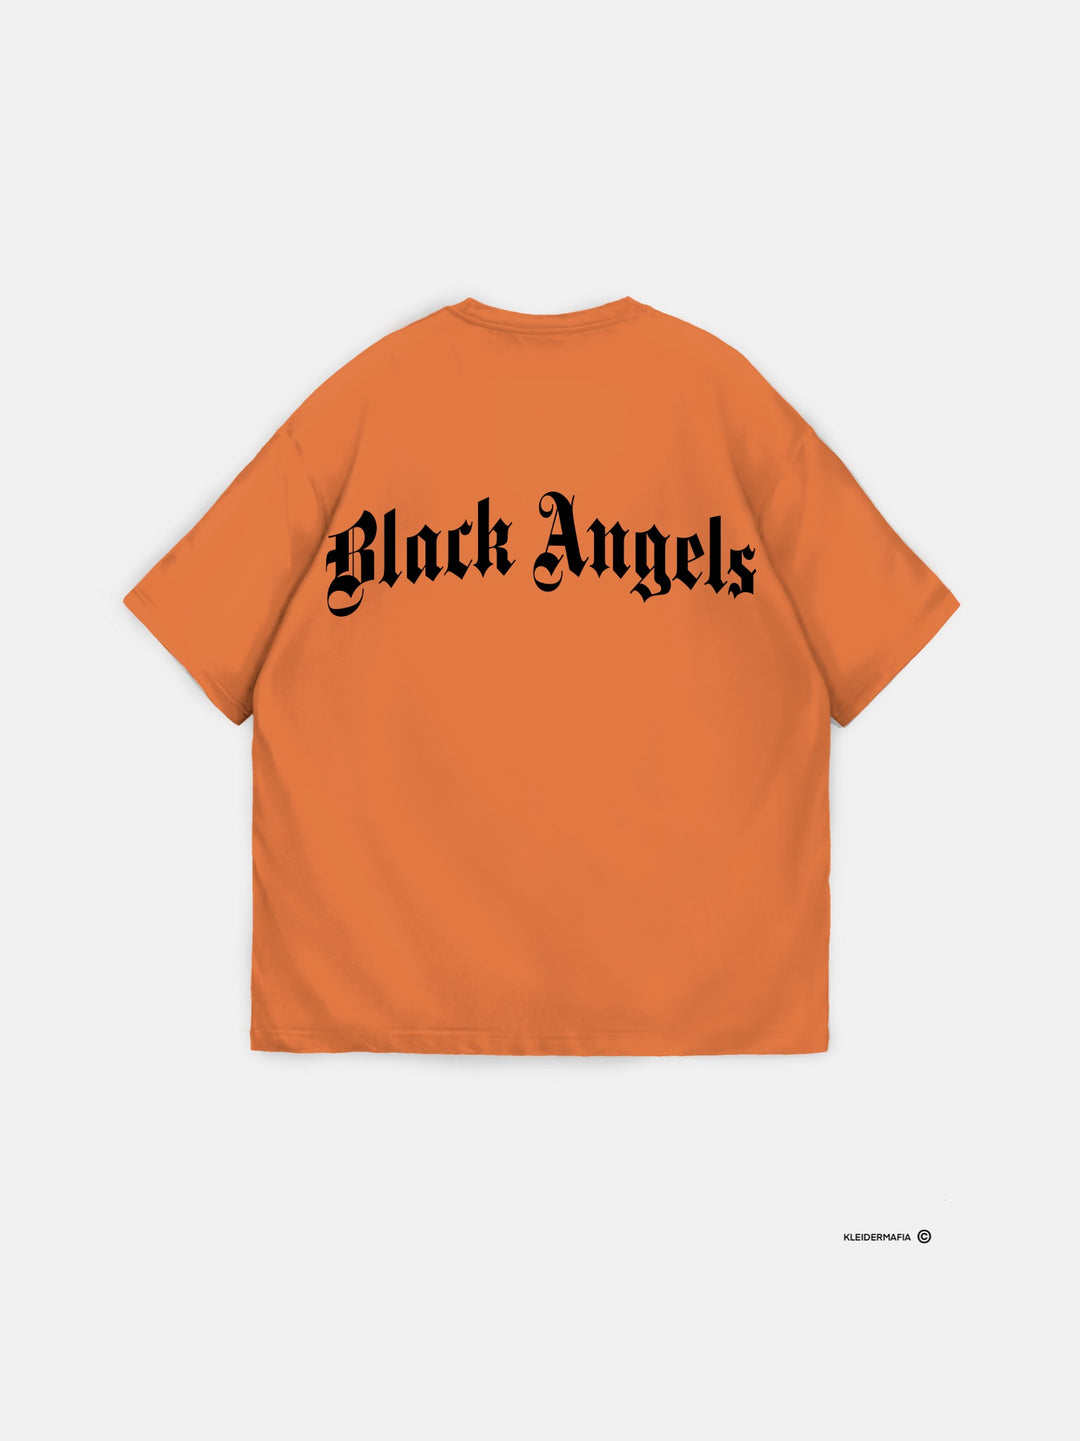 Oversize Black Angels T-Shirt - Salmon